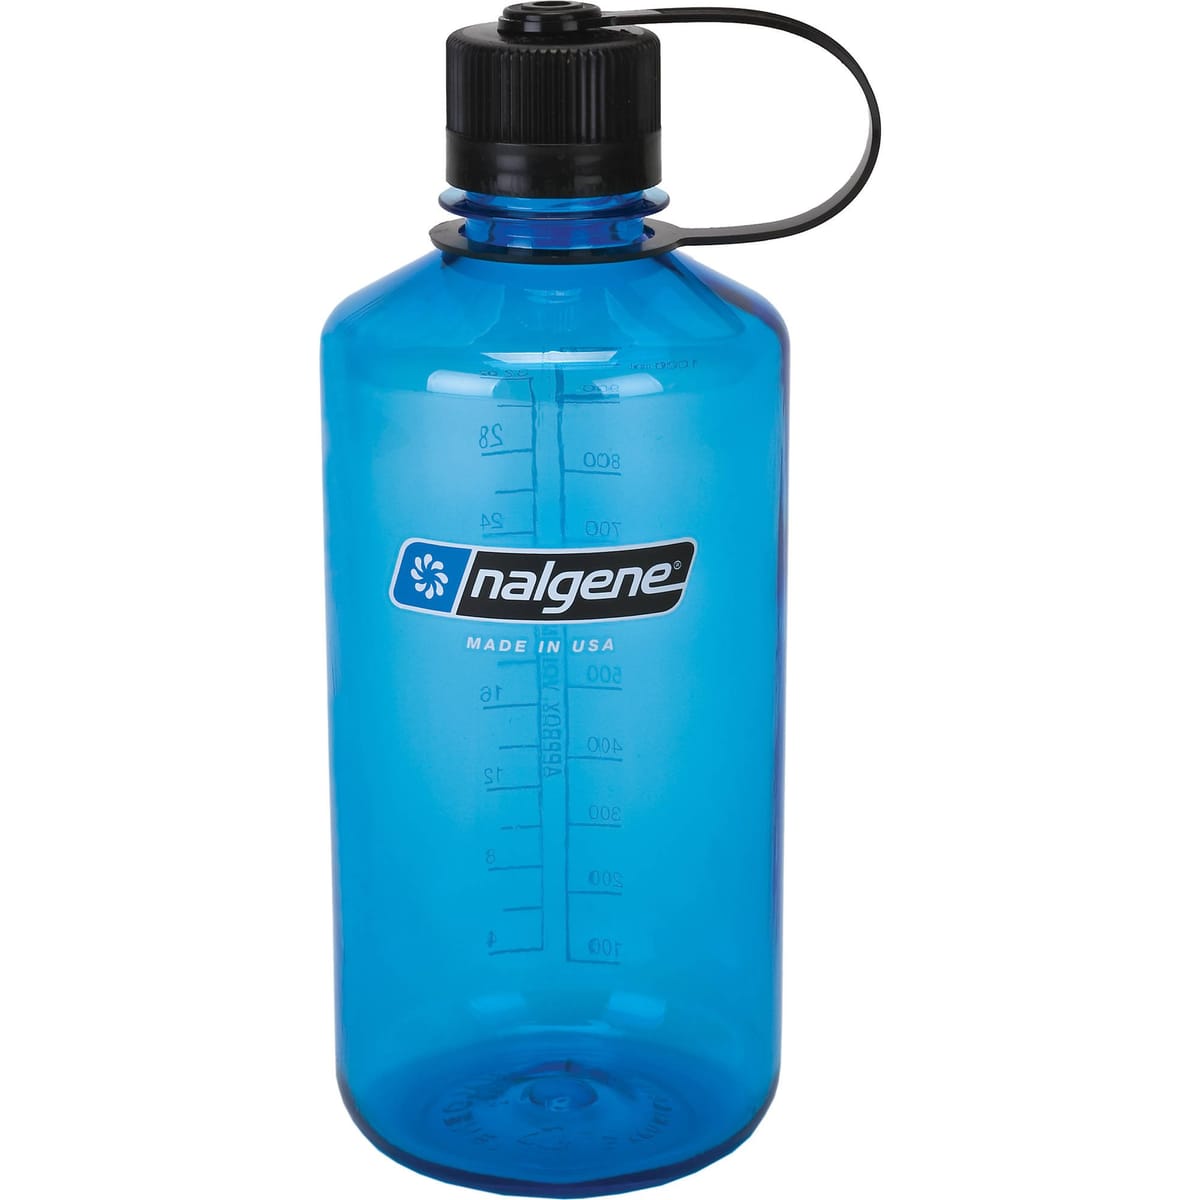 Nalgene Tritan 32-Ounce Narrow Mouth BPA-Free Water Bottle Blue w/Black